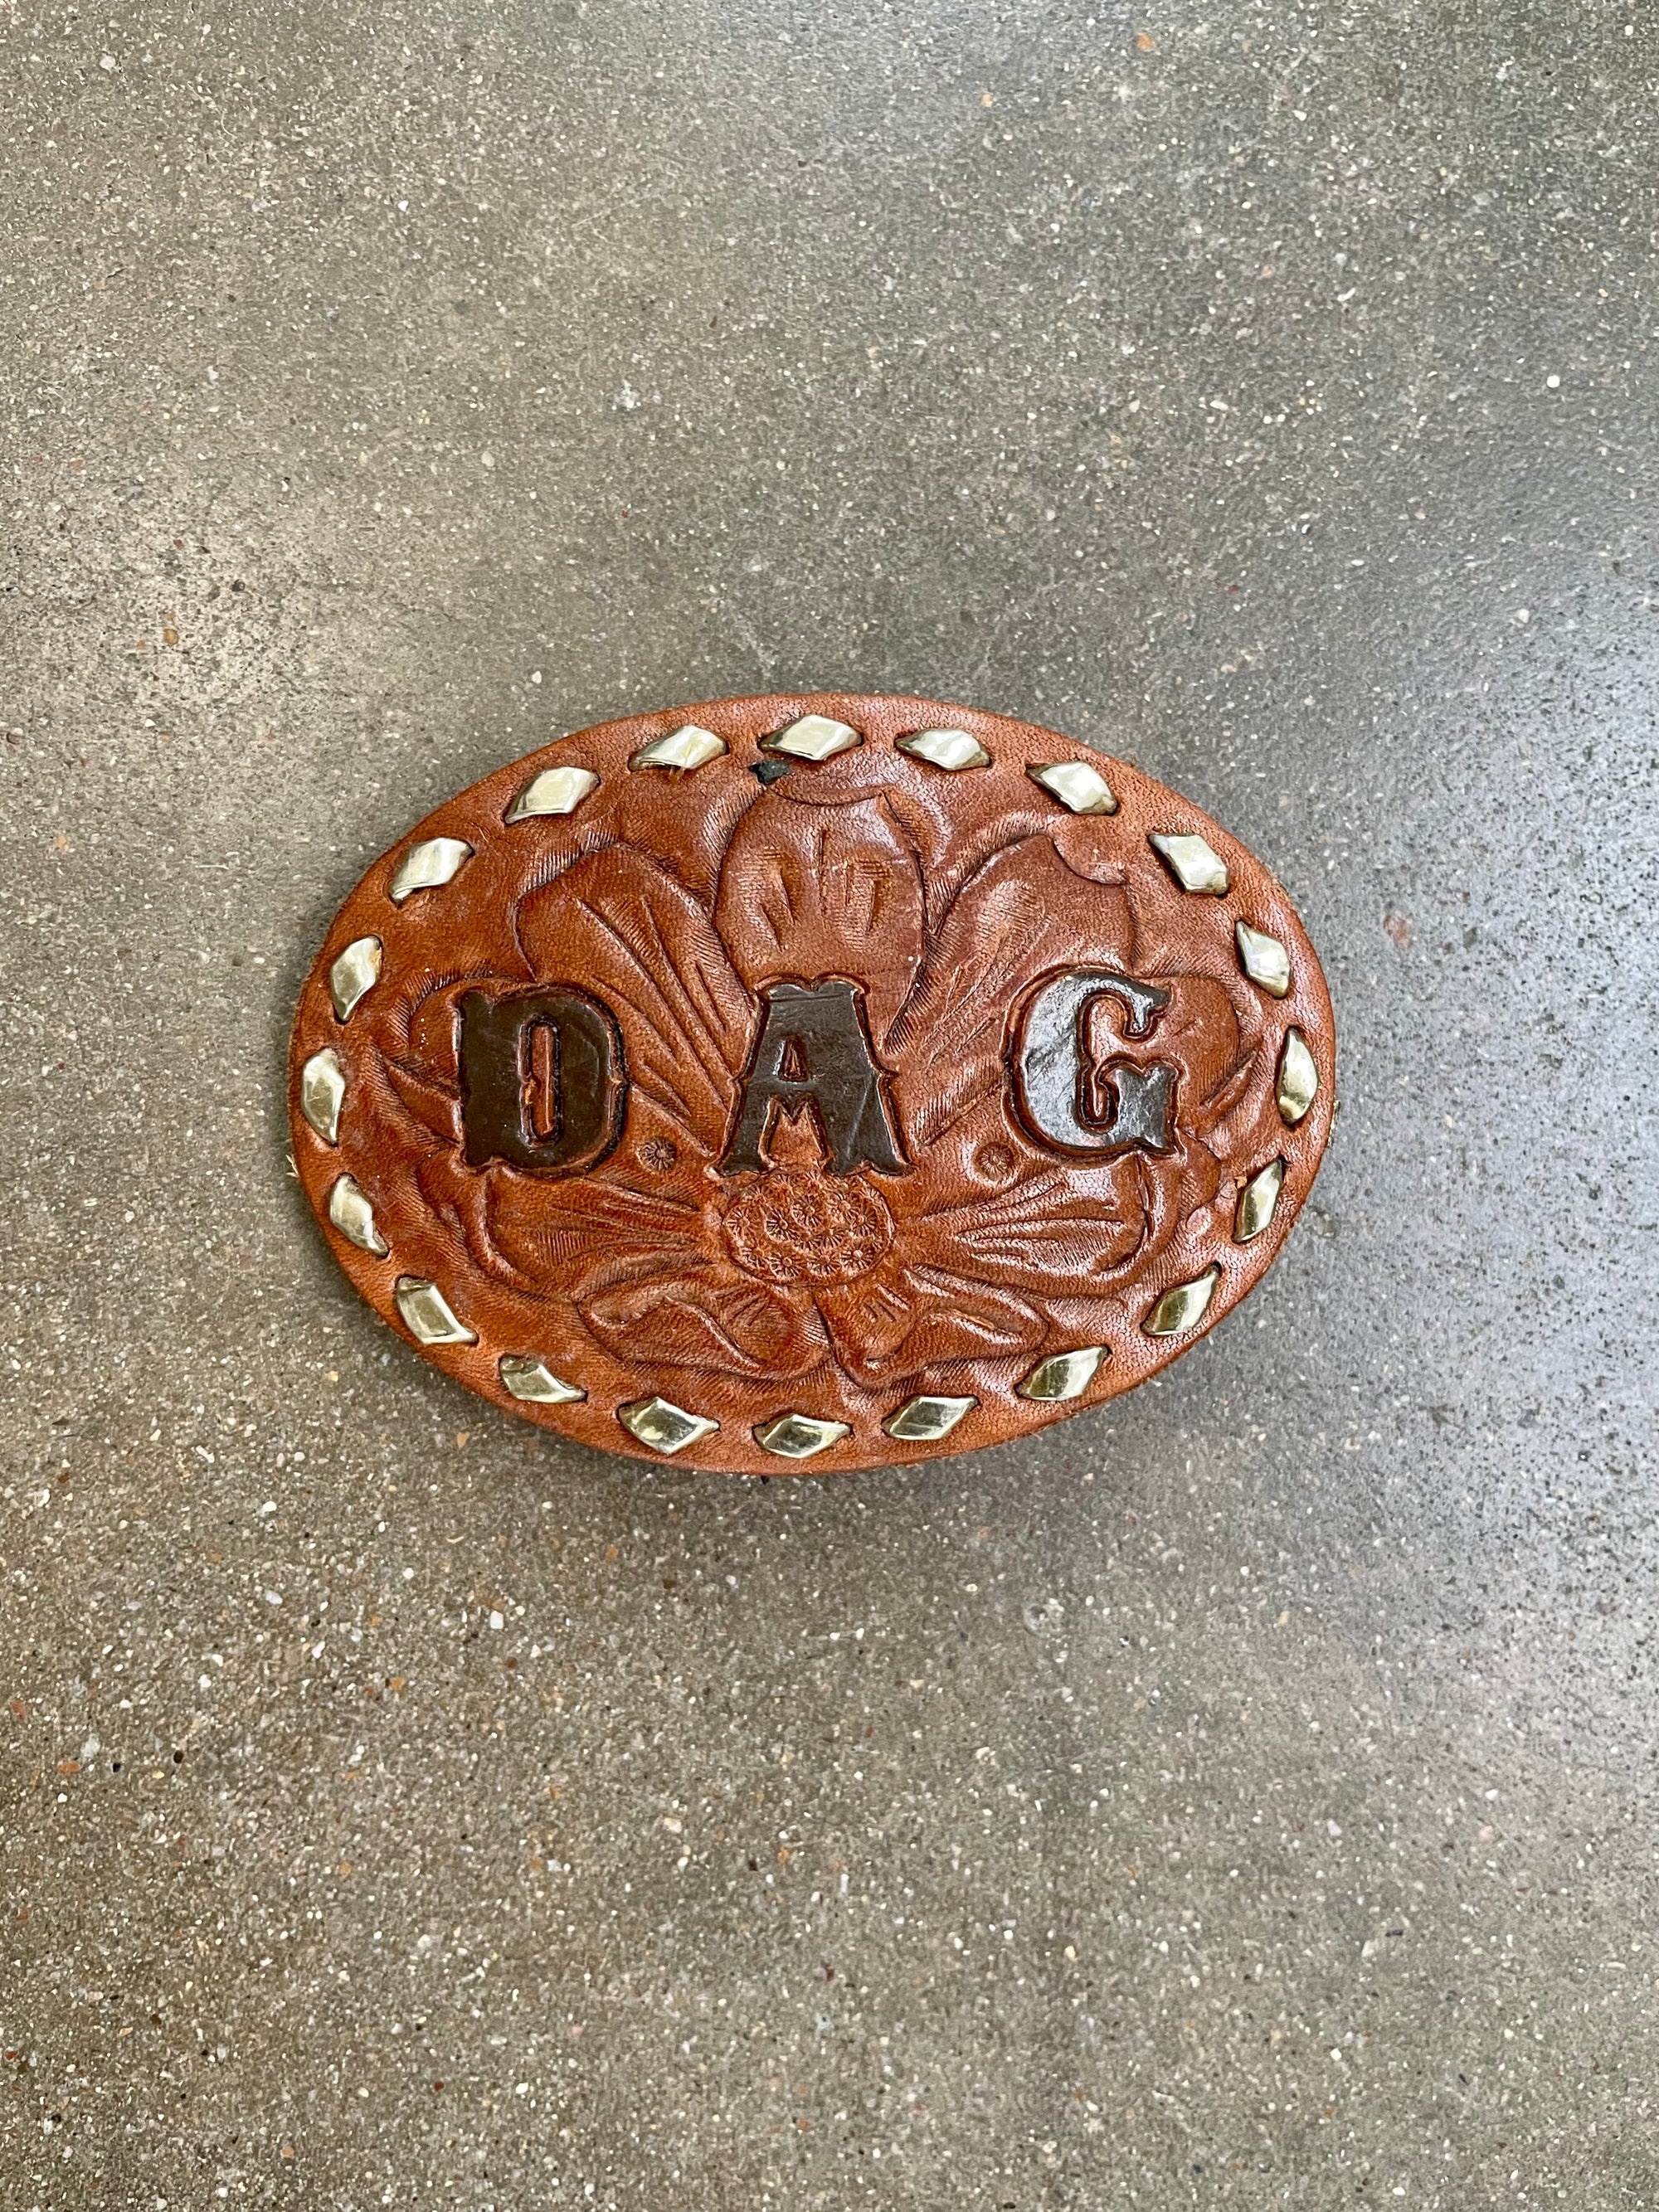 Vintage "D.A.G" Leather Belt Buckle